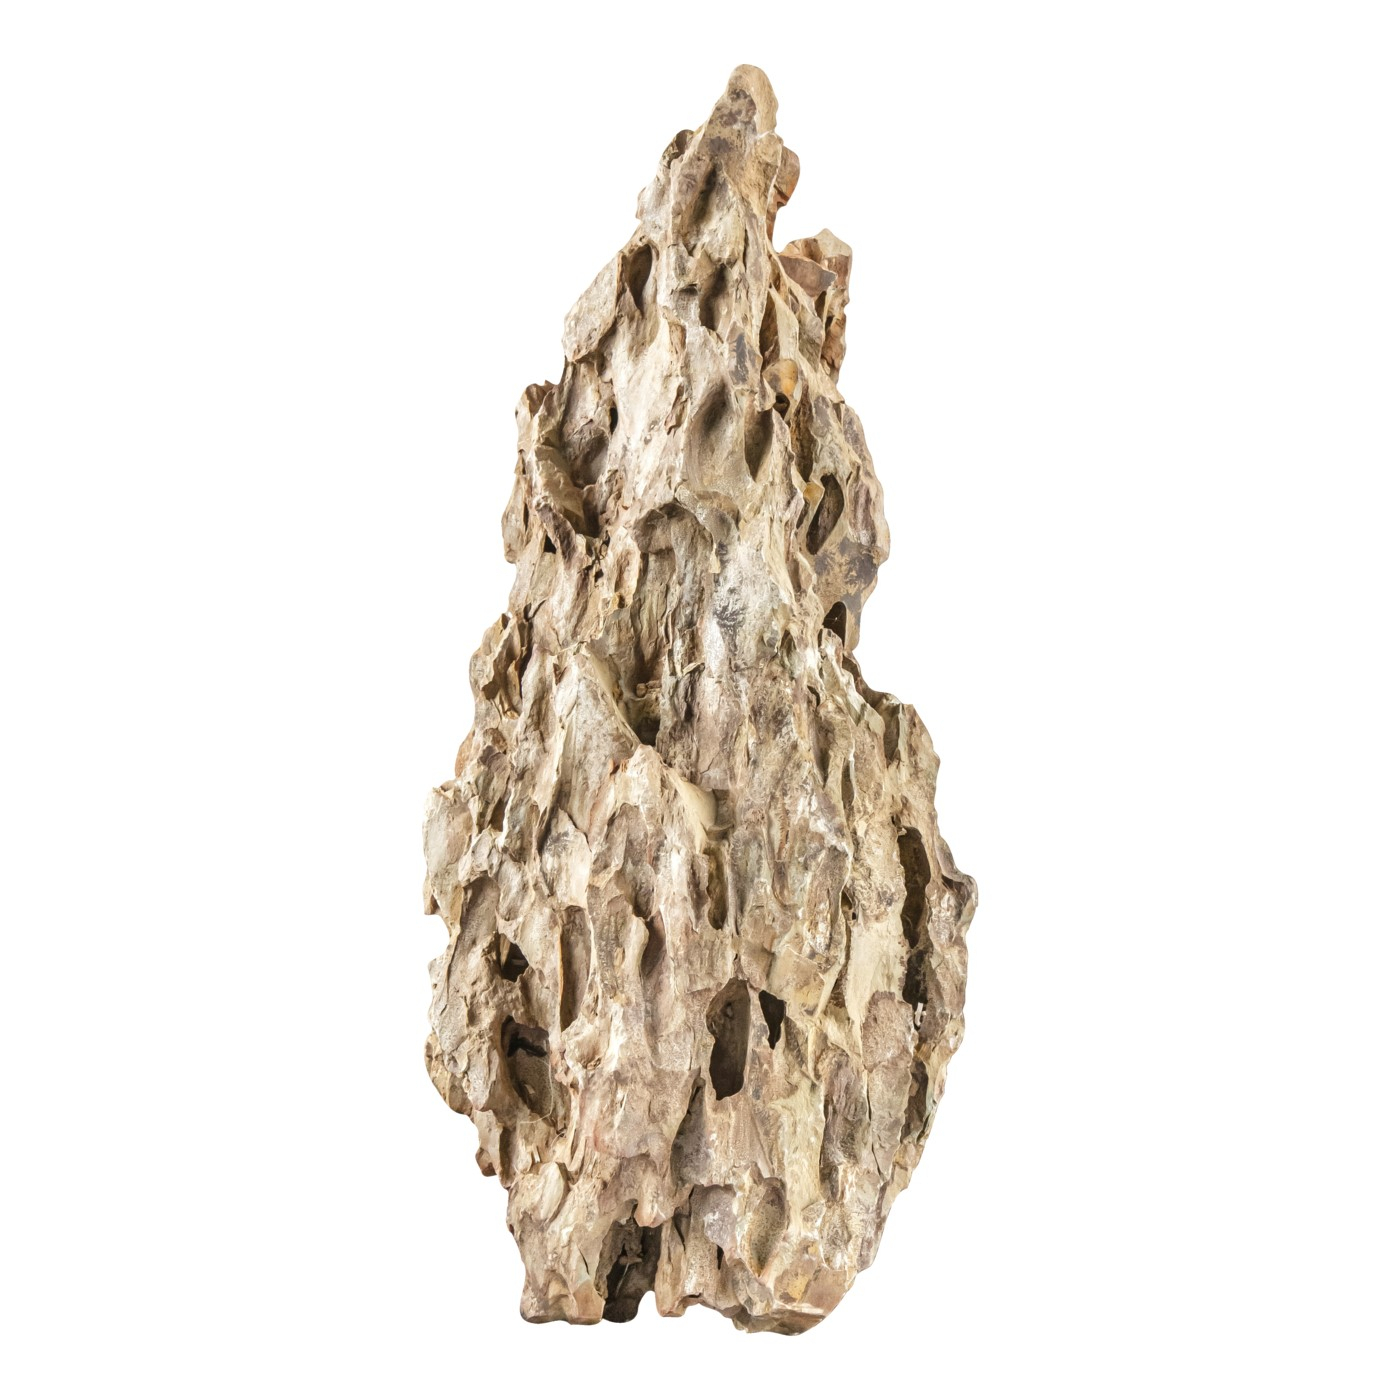 Sera Rock Dragon Stone Naturgestein für Aquascaping